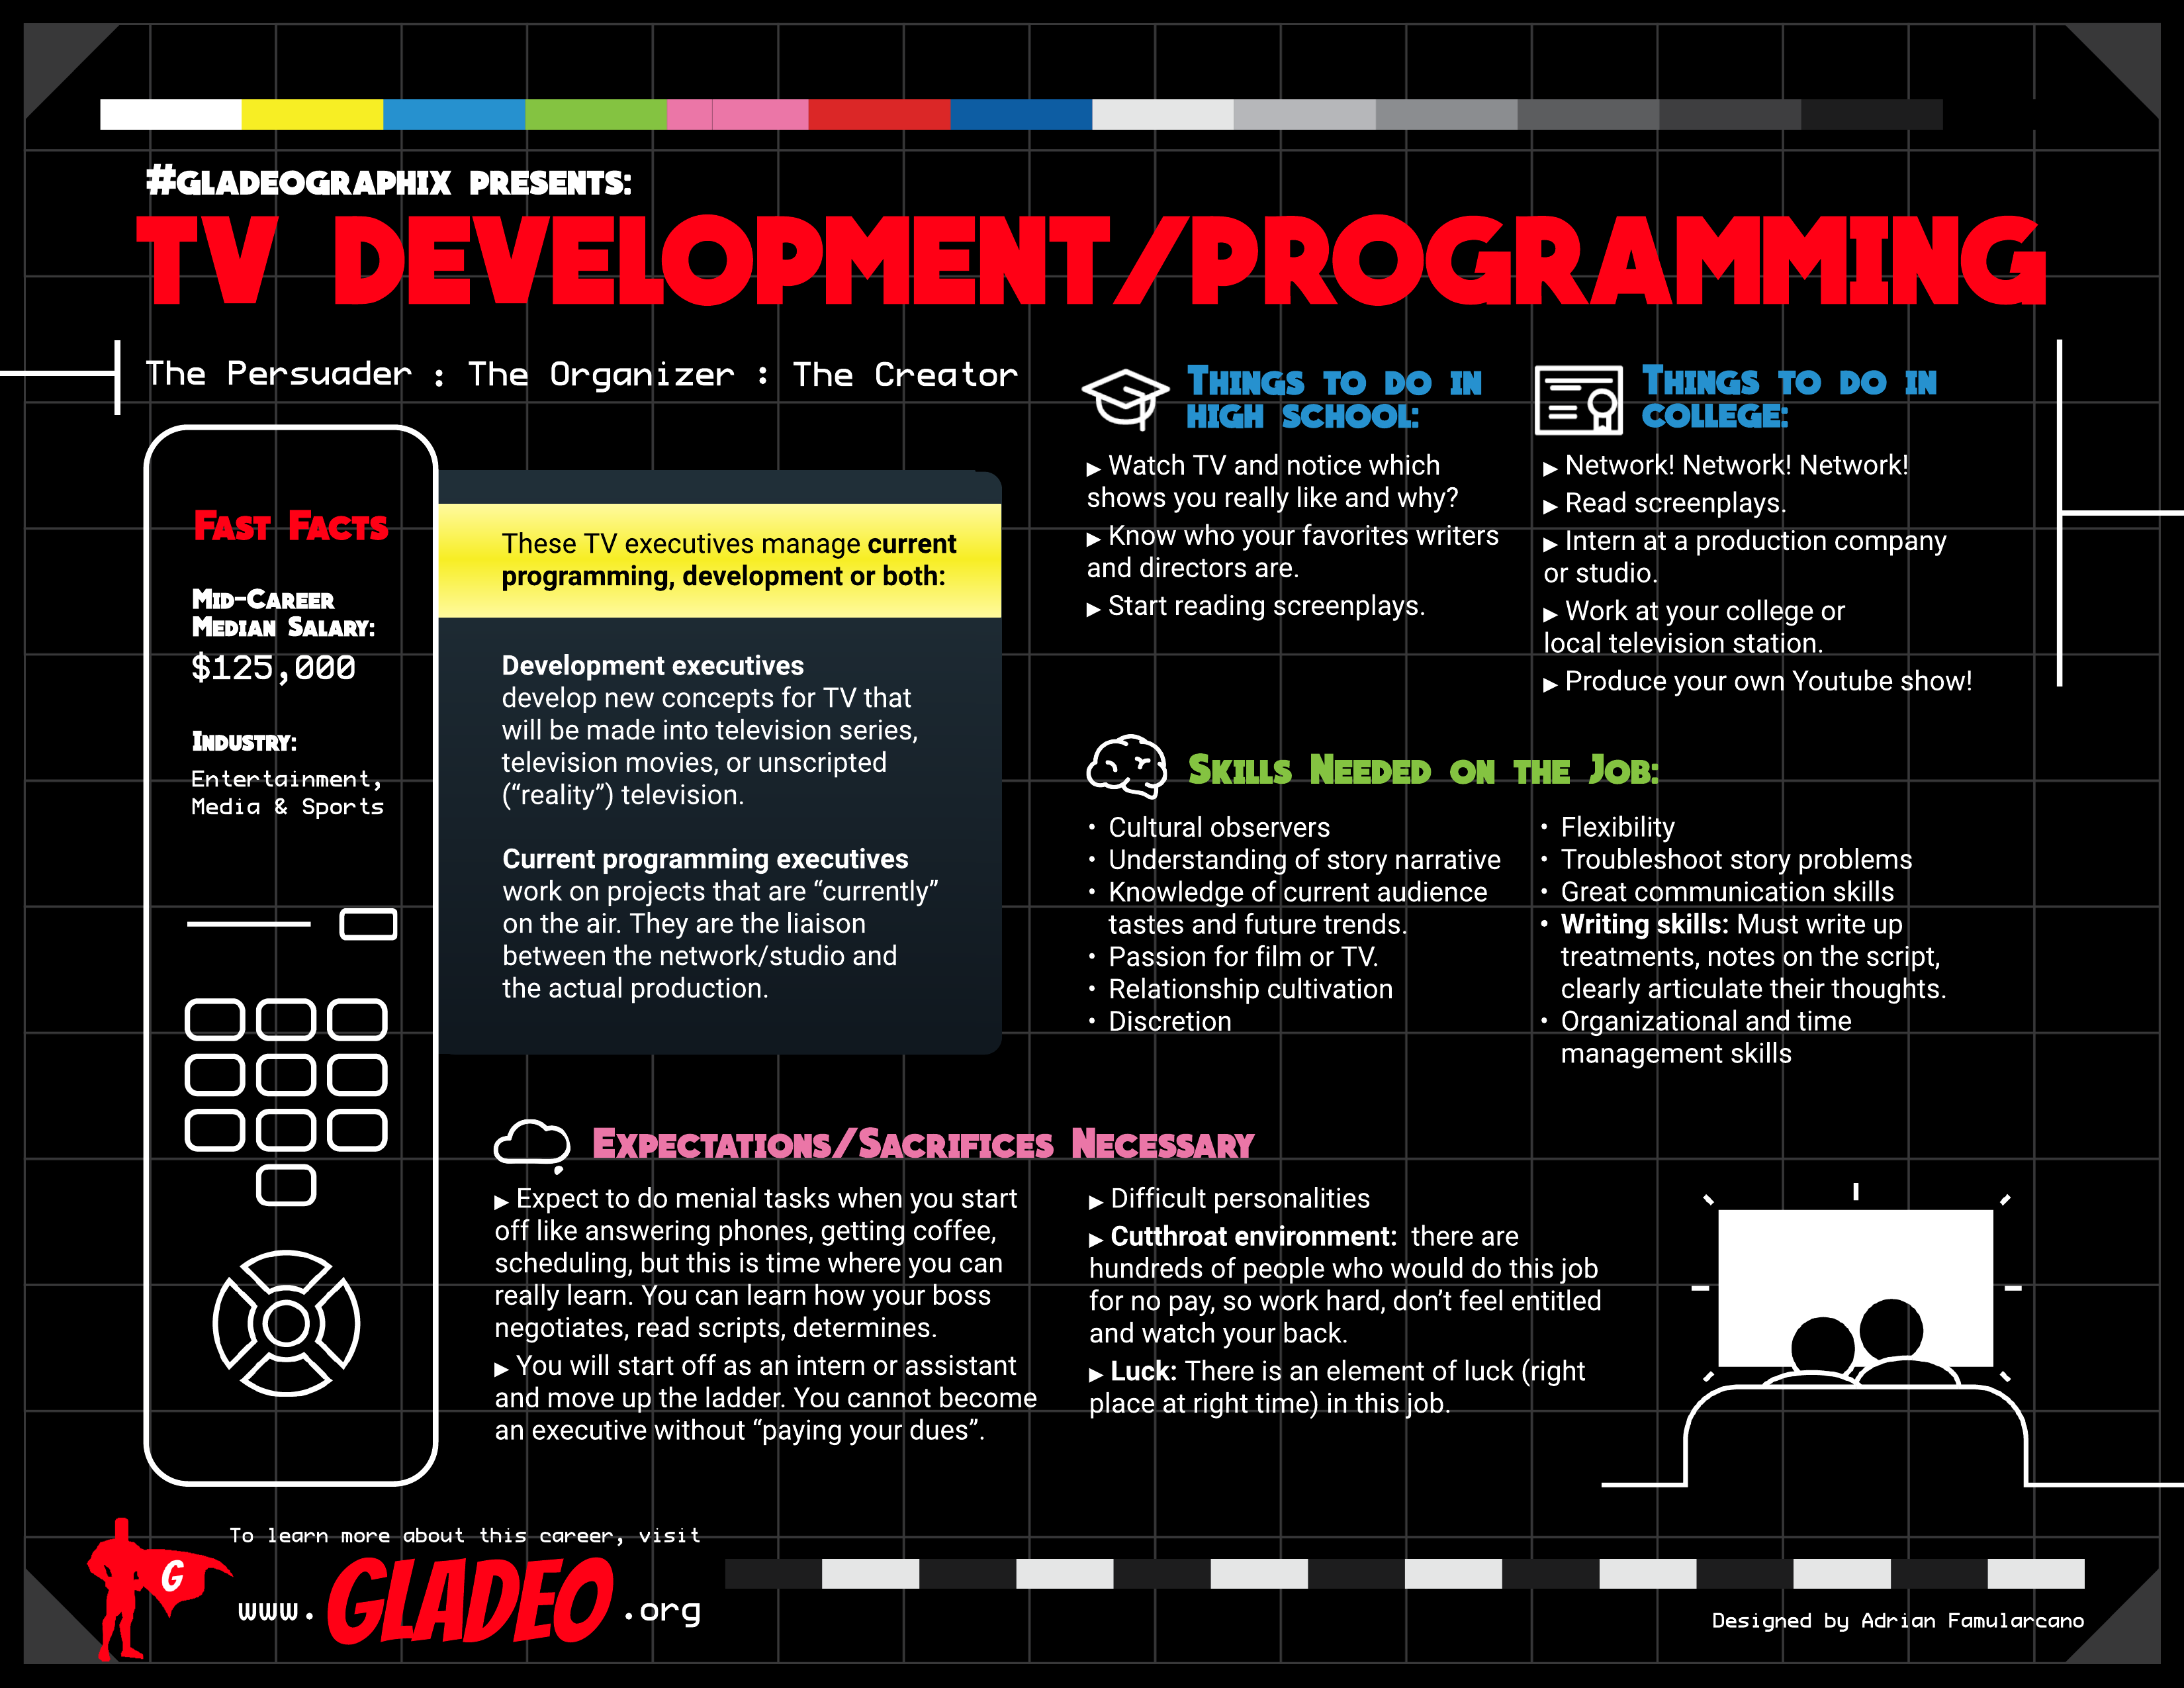 Gladeographix TV Development and Programming